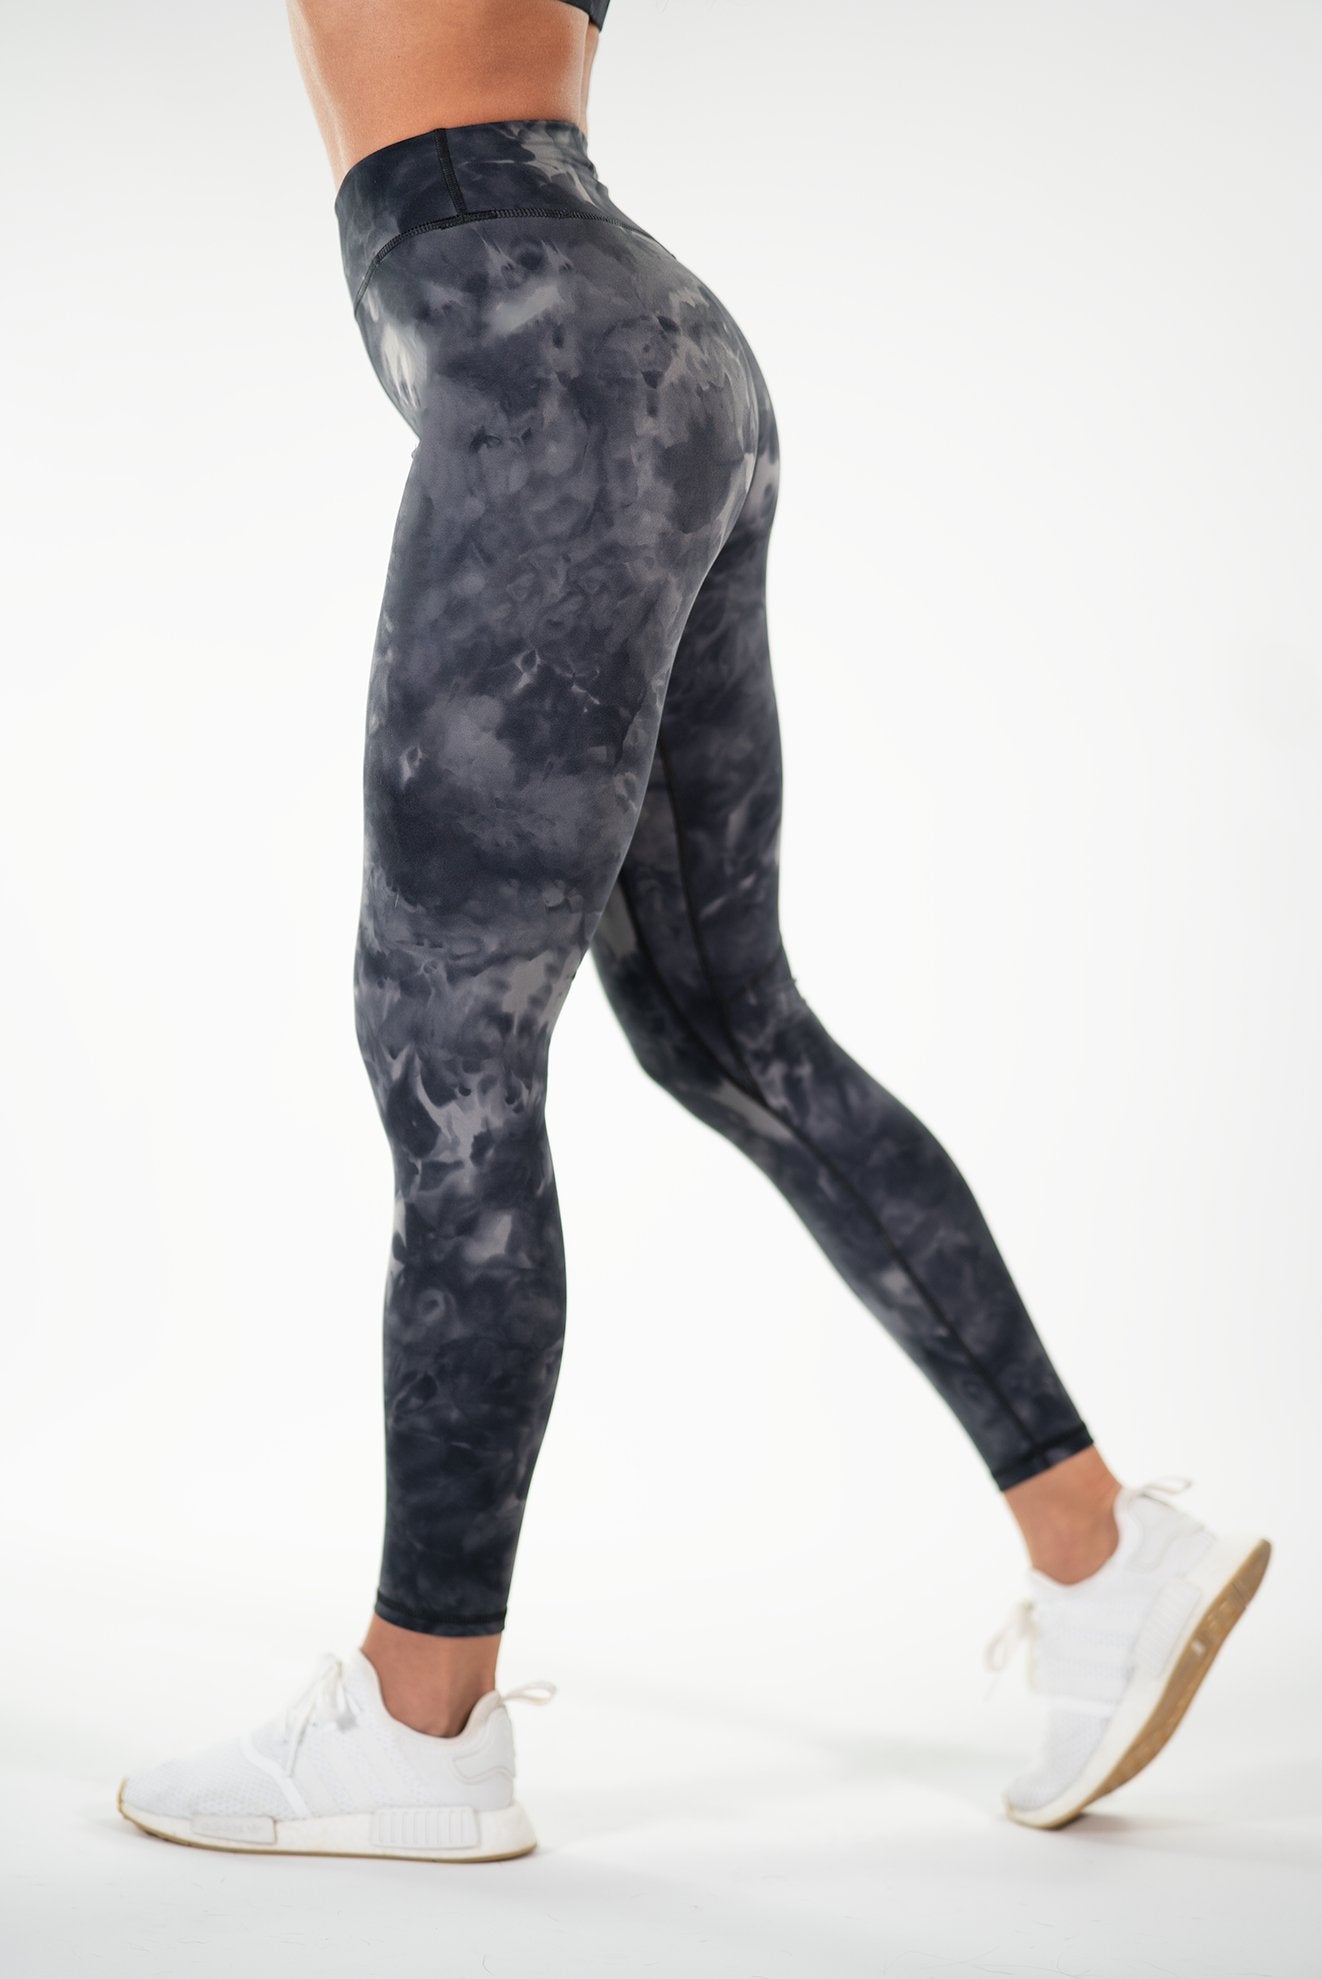 Marble dye align leggings lululemon - Athletic apparel